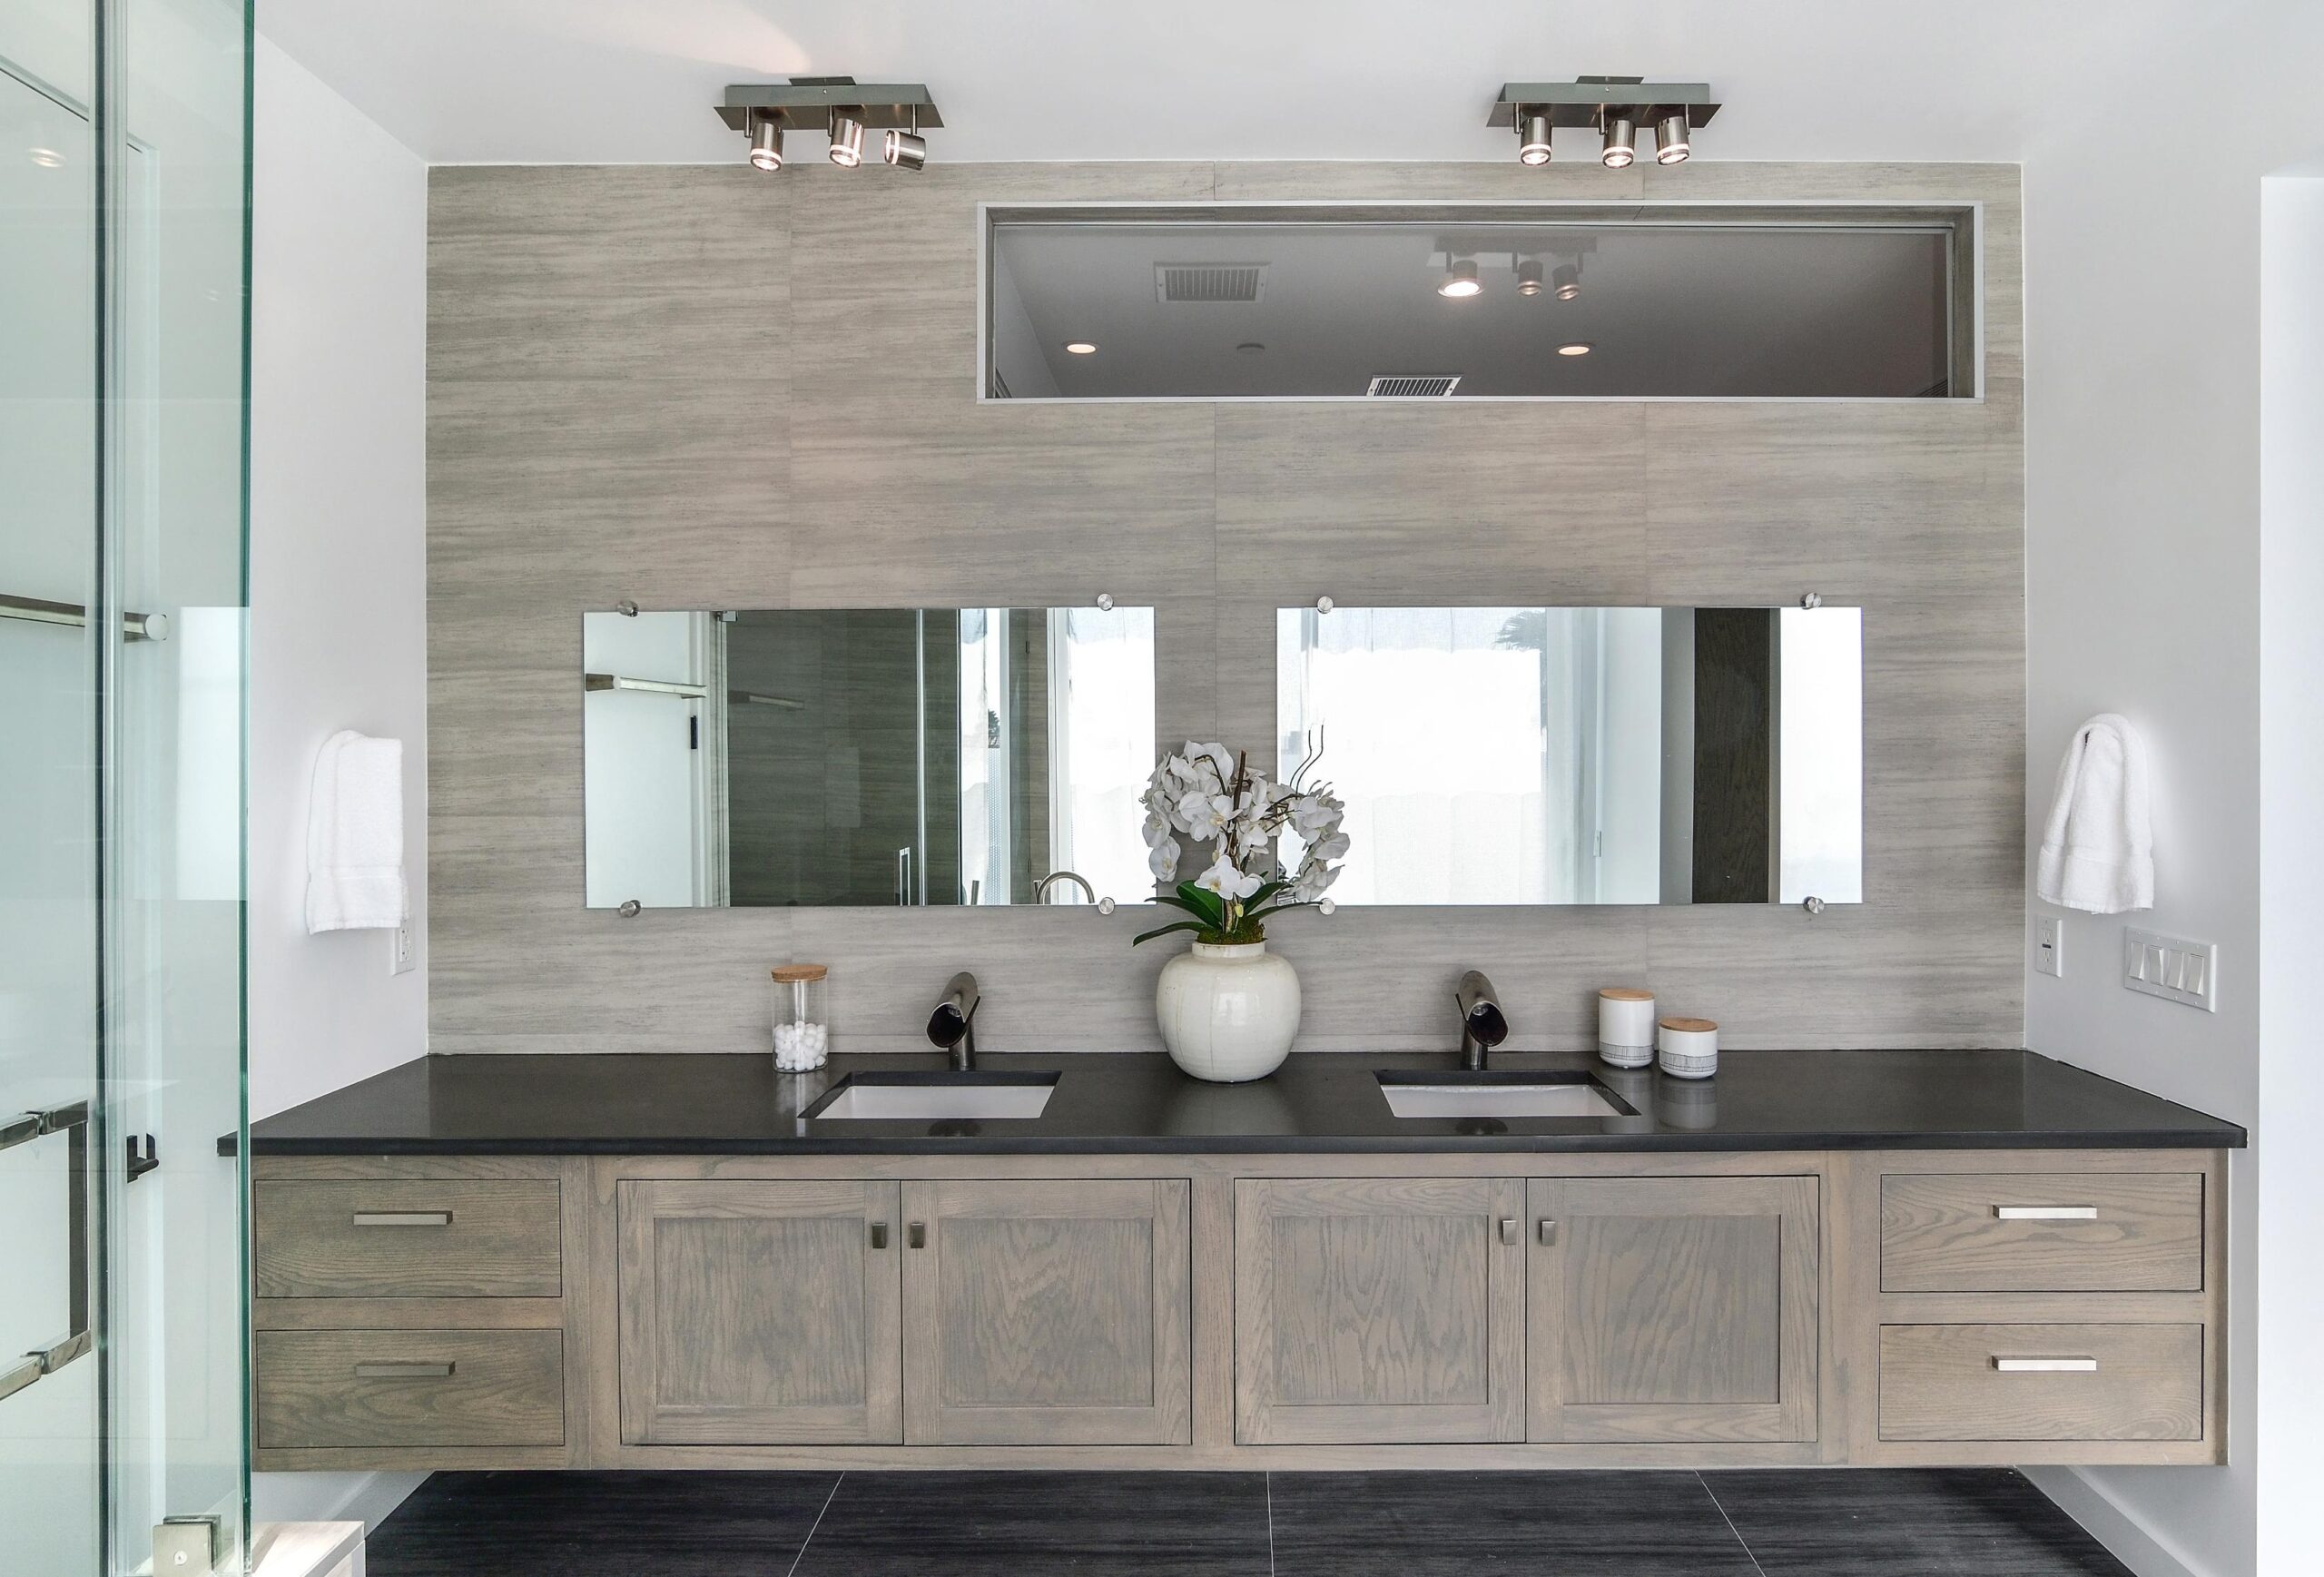 Bathroom remodel with minimalist style and sleek design